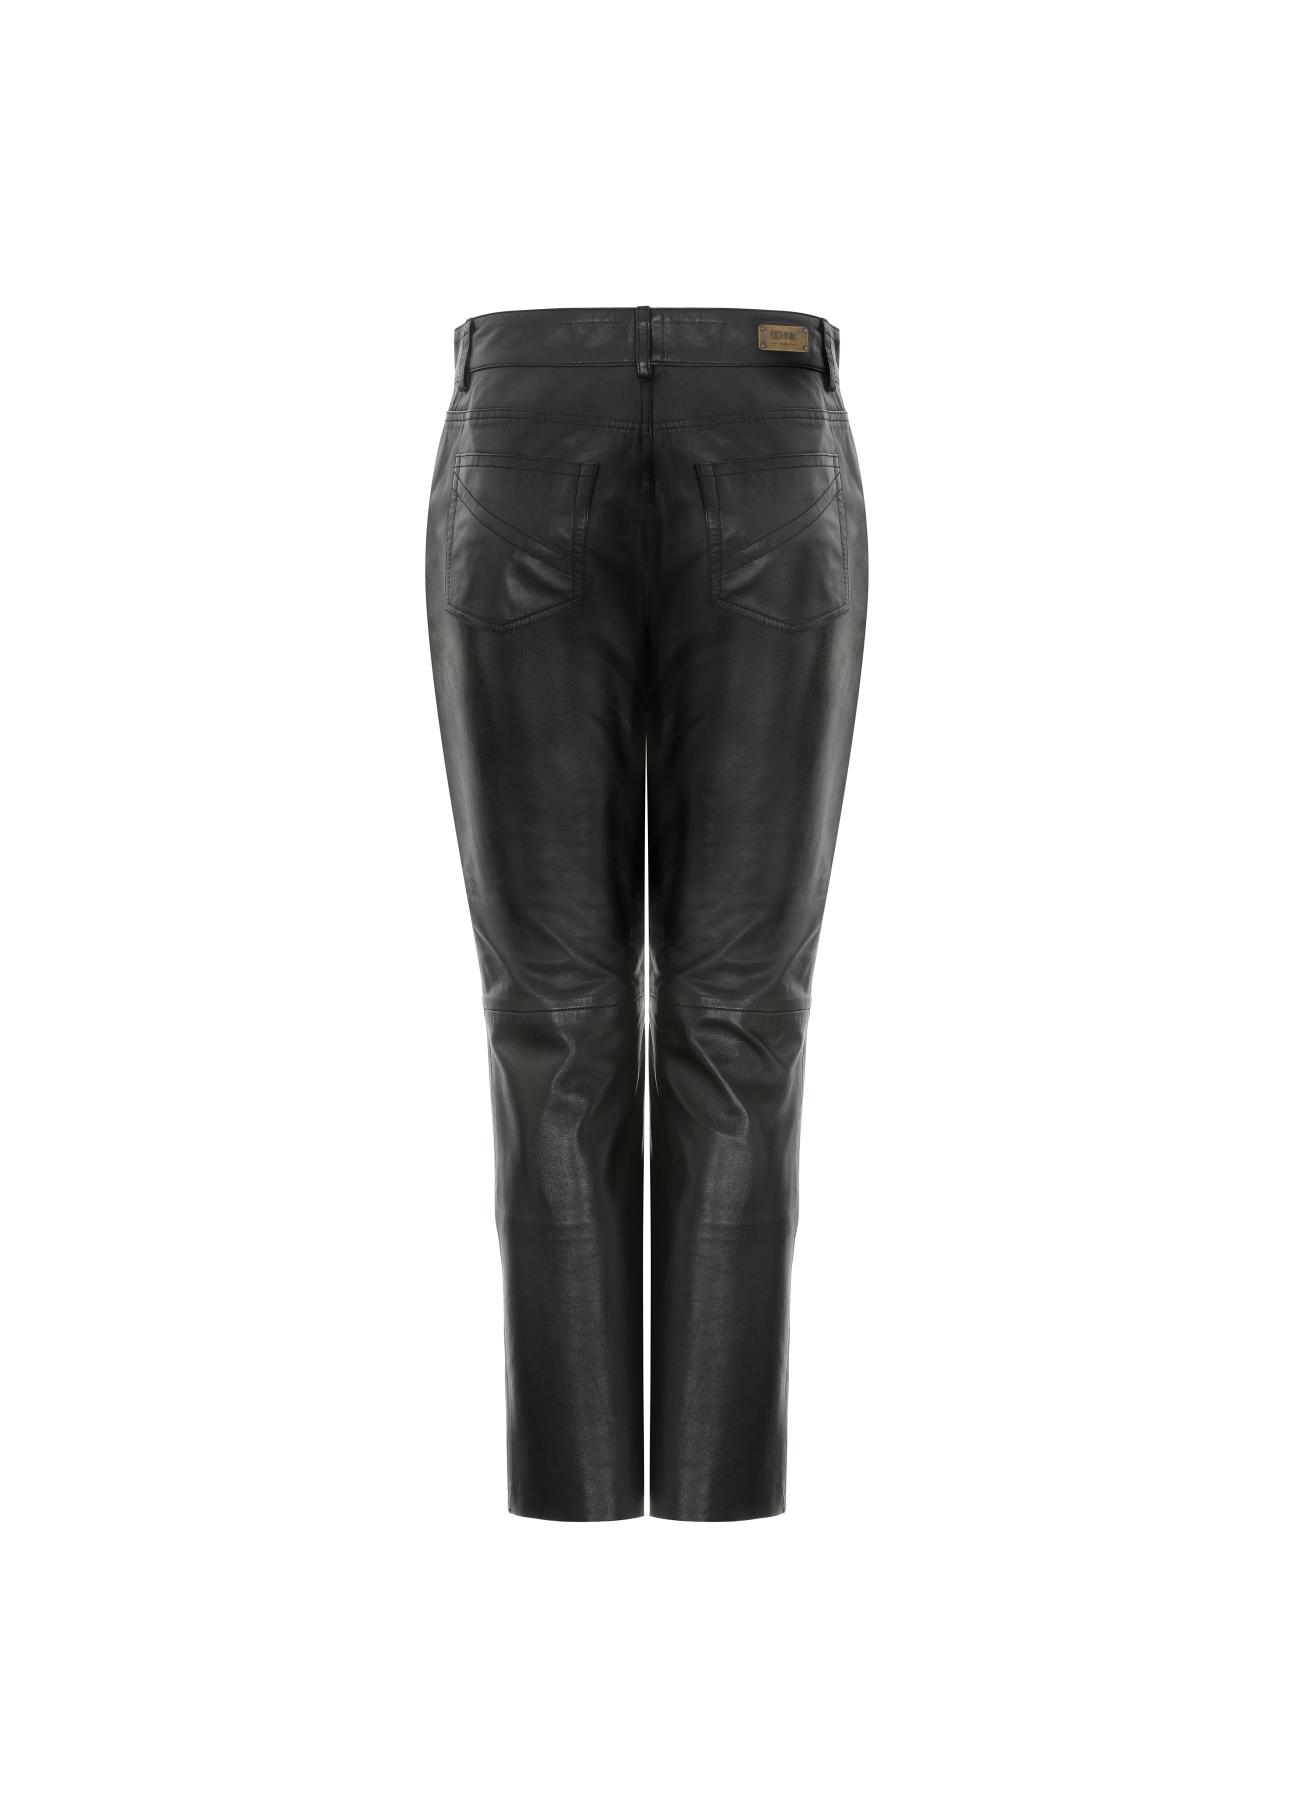 Spodnie czarne skórzane damskie SPODS-0026-5491(Z21)